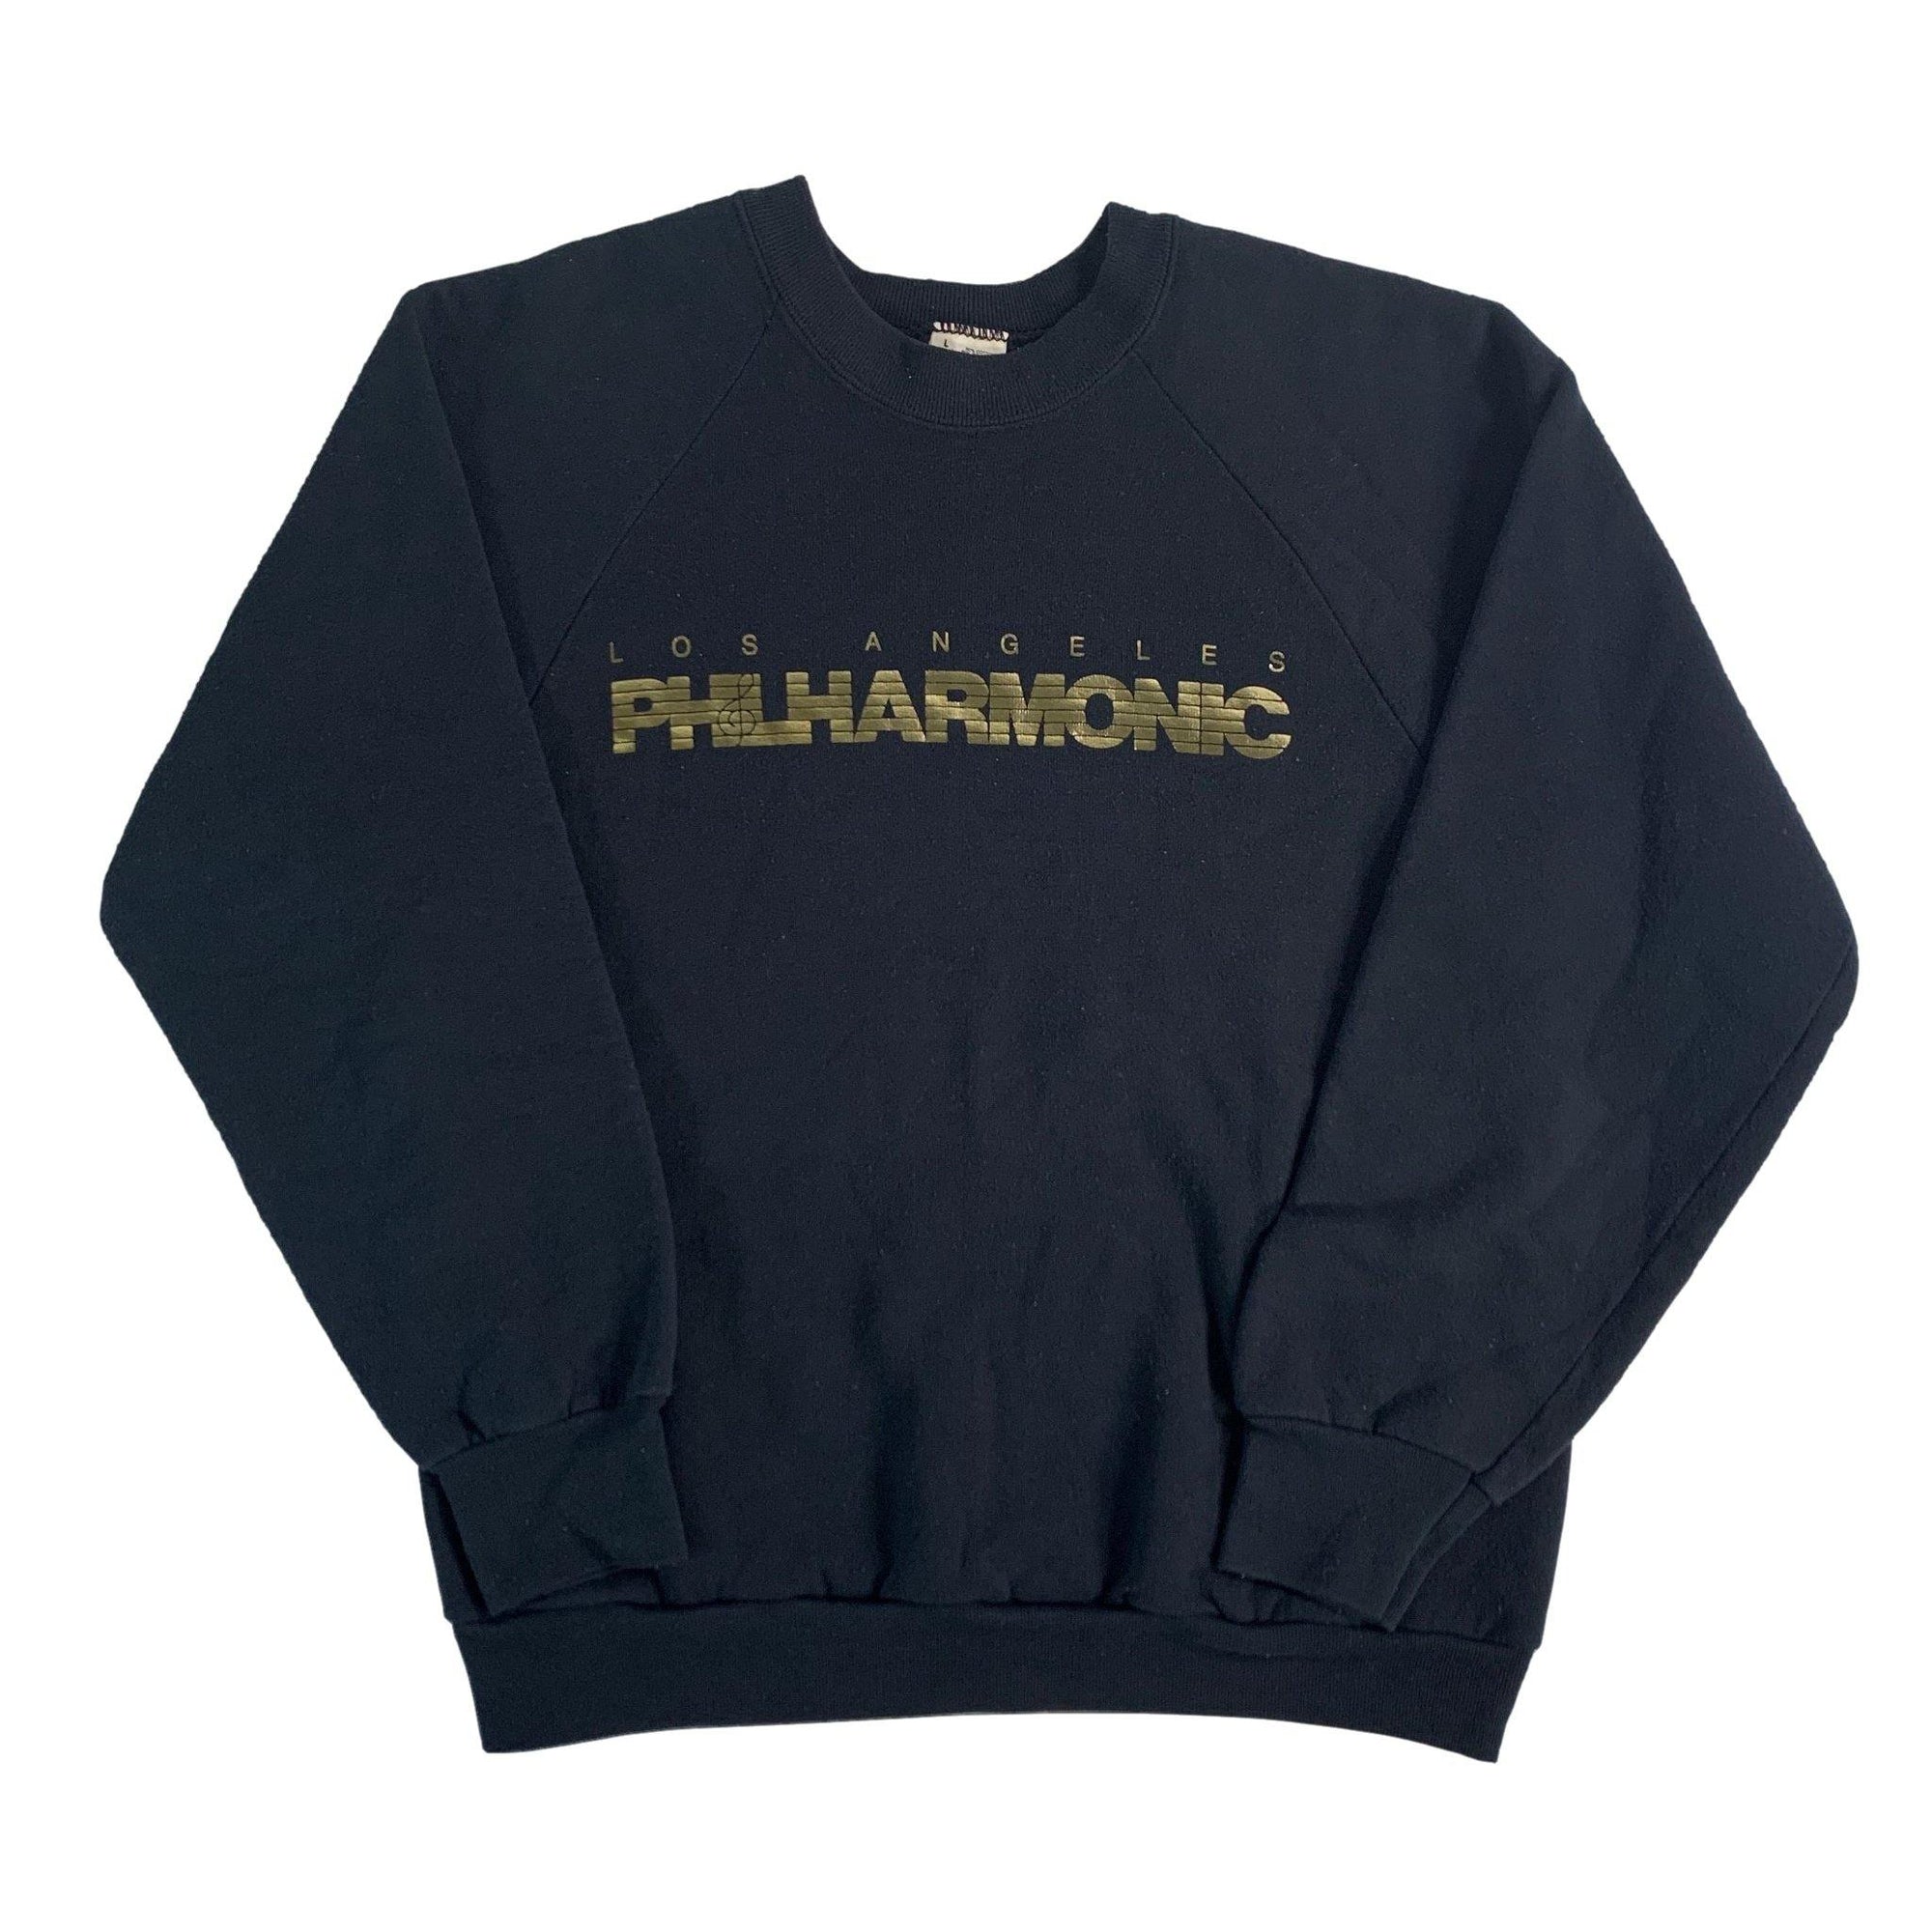 Vintage Los Angeles Philharmonic "Concert" Crewneck Sweatshirt - jointcustodydc